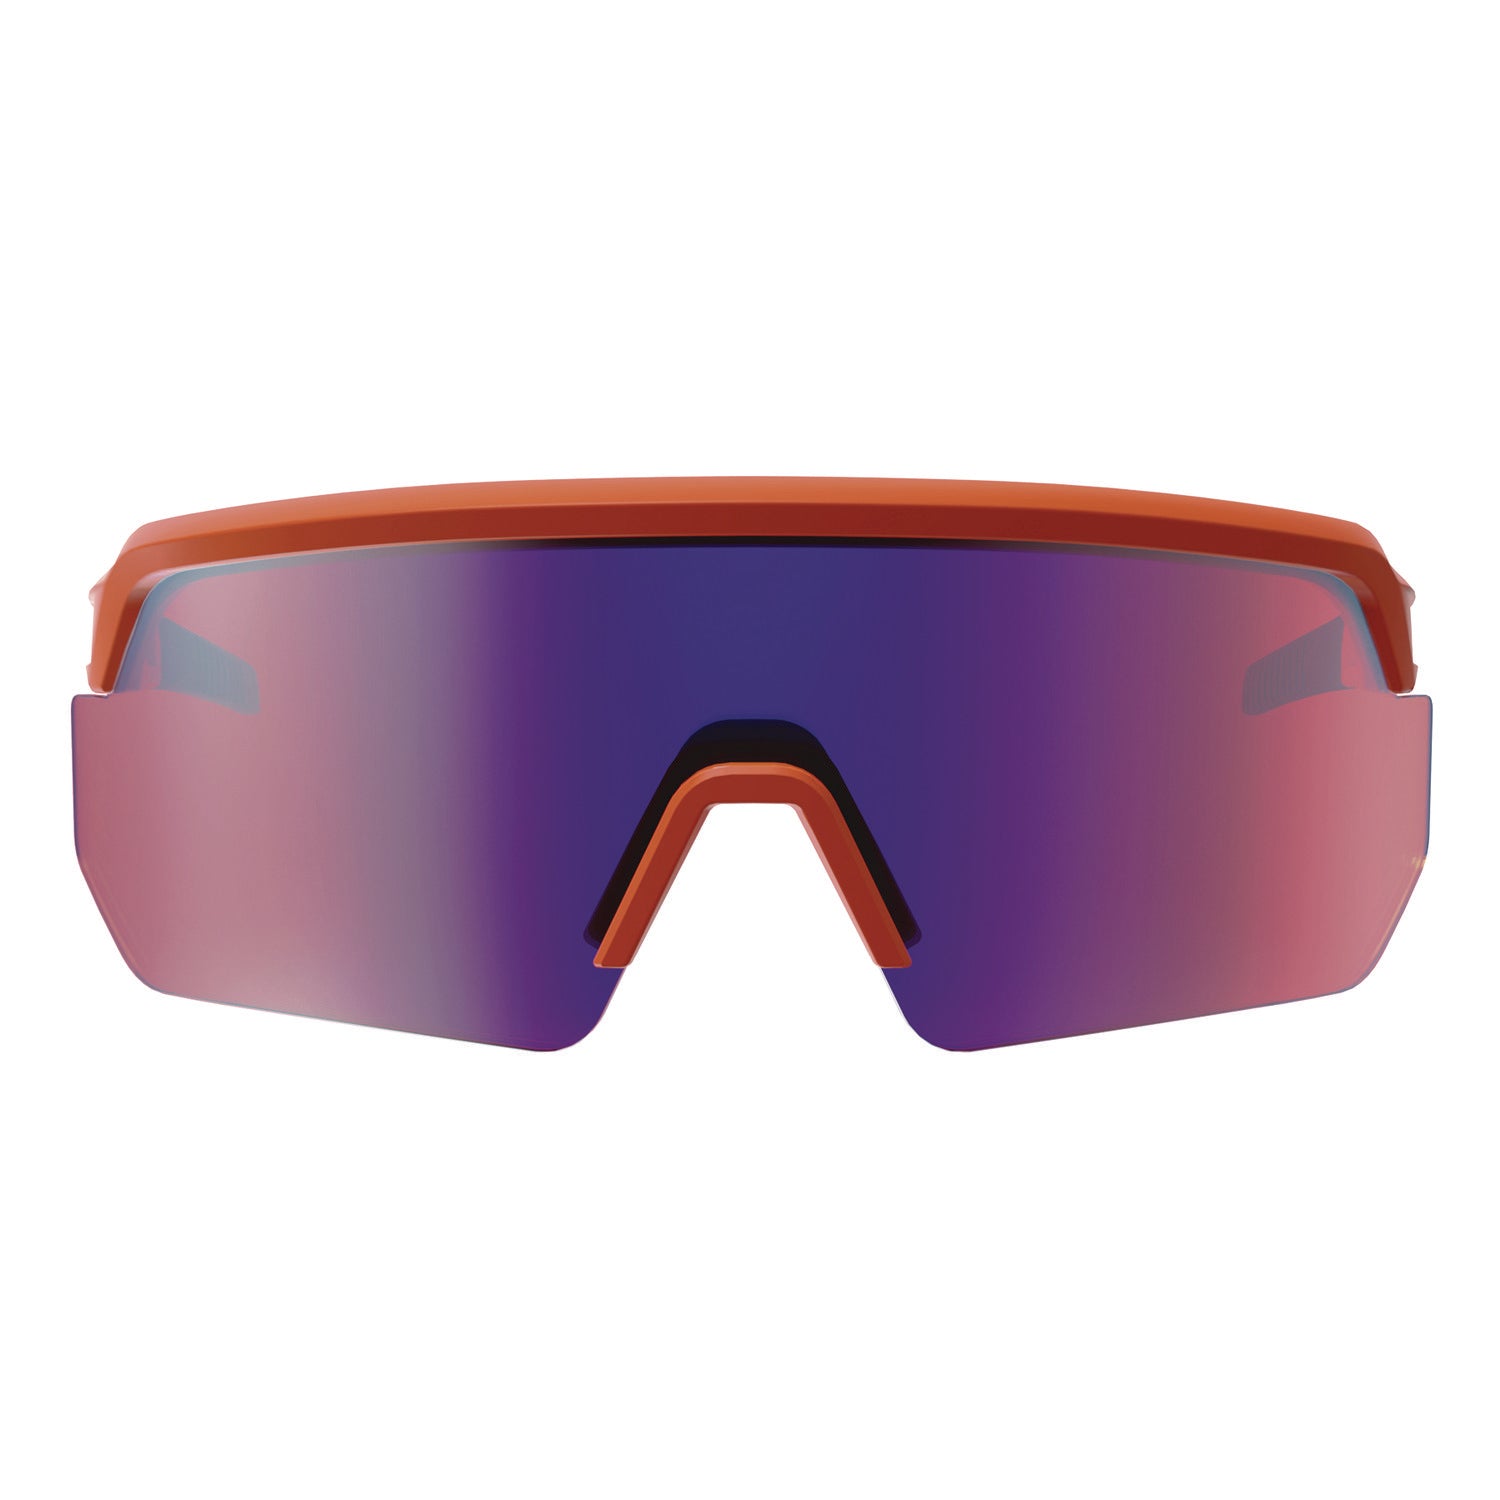 skullerz-aegir-anti-scratch-anti-fog-safety-glasses-orange-nylon-frame-purple-mirror-lens-ships-in-1-3-bus-days_ego55020 - 2